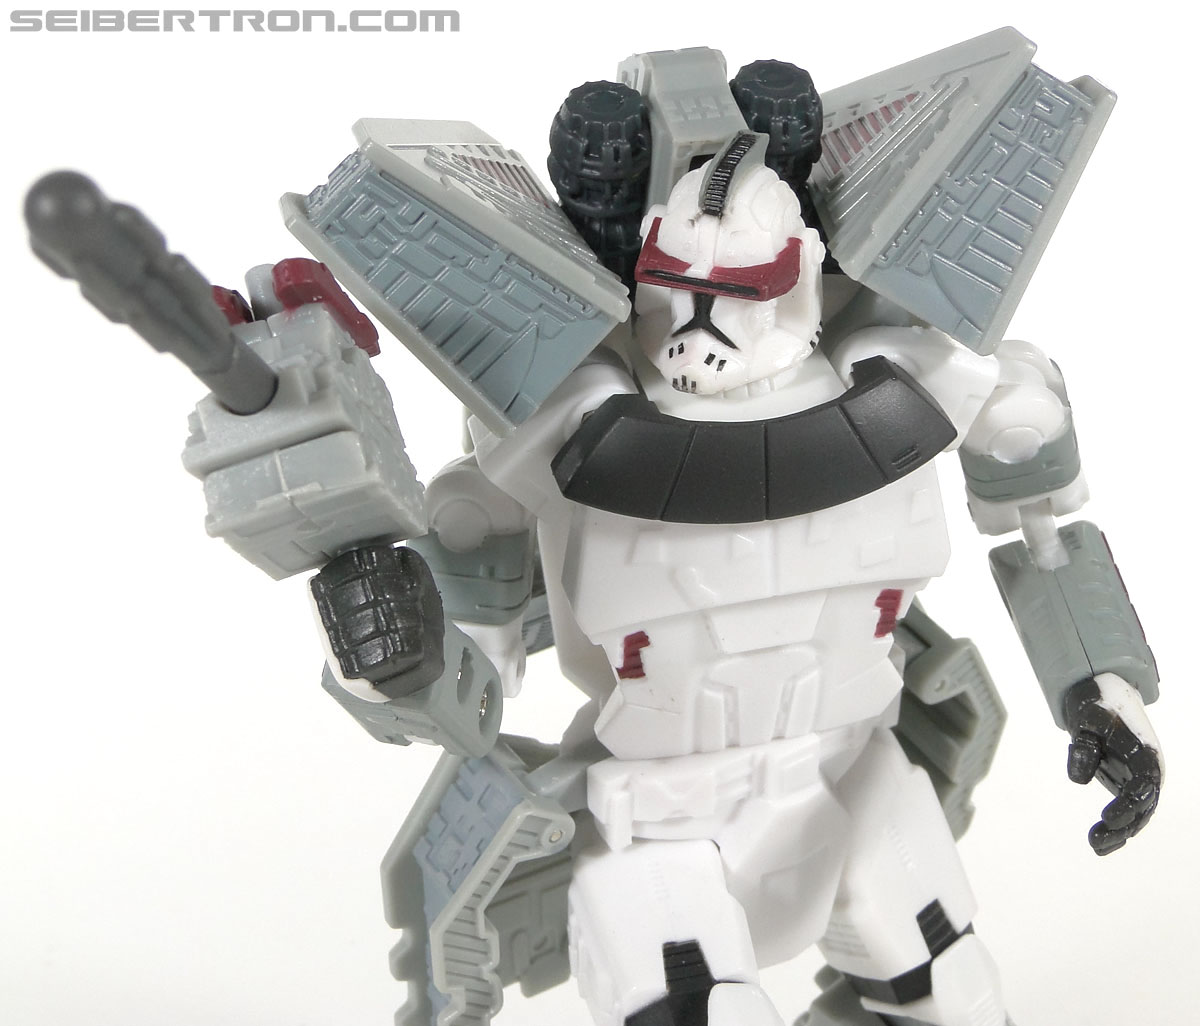 Star Wars Transformers Lieutenant Thire (Republic Attack Cruiser) (Image #75 of 76)